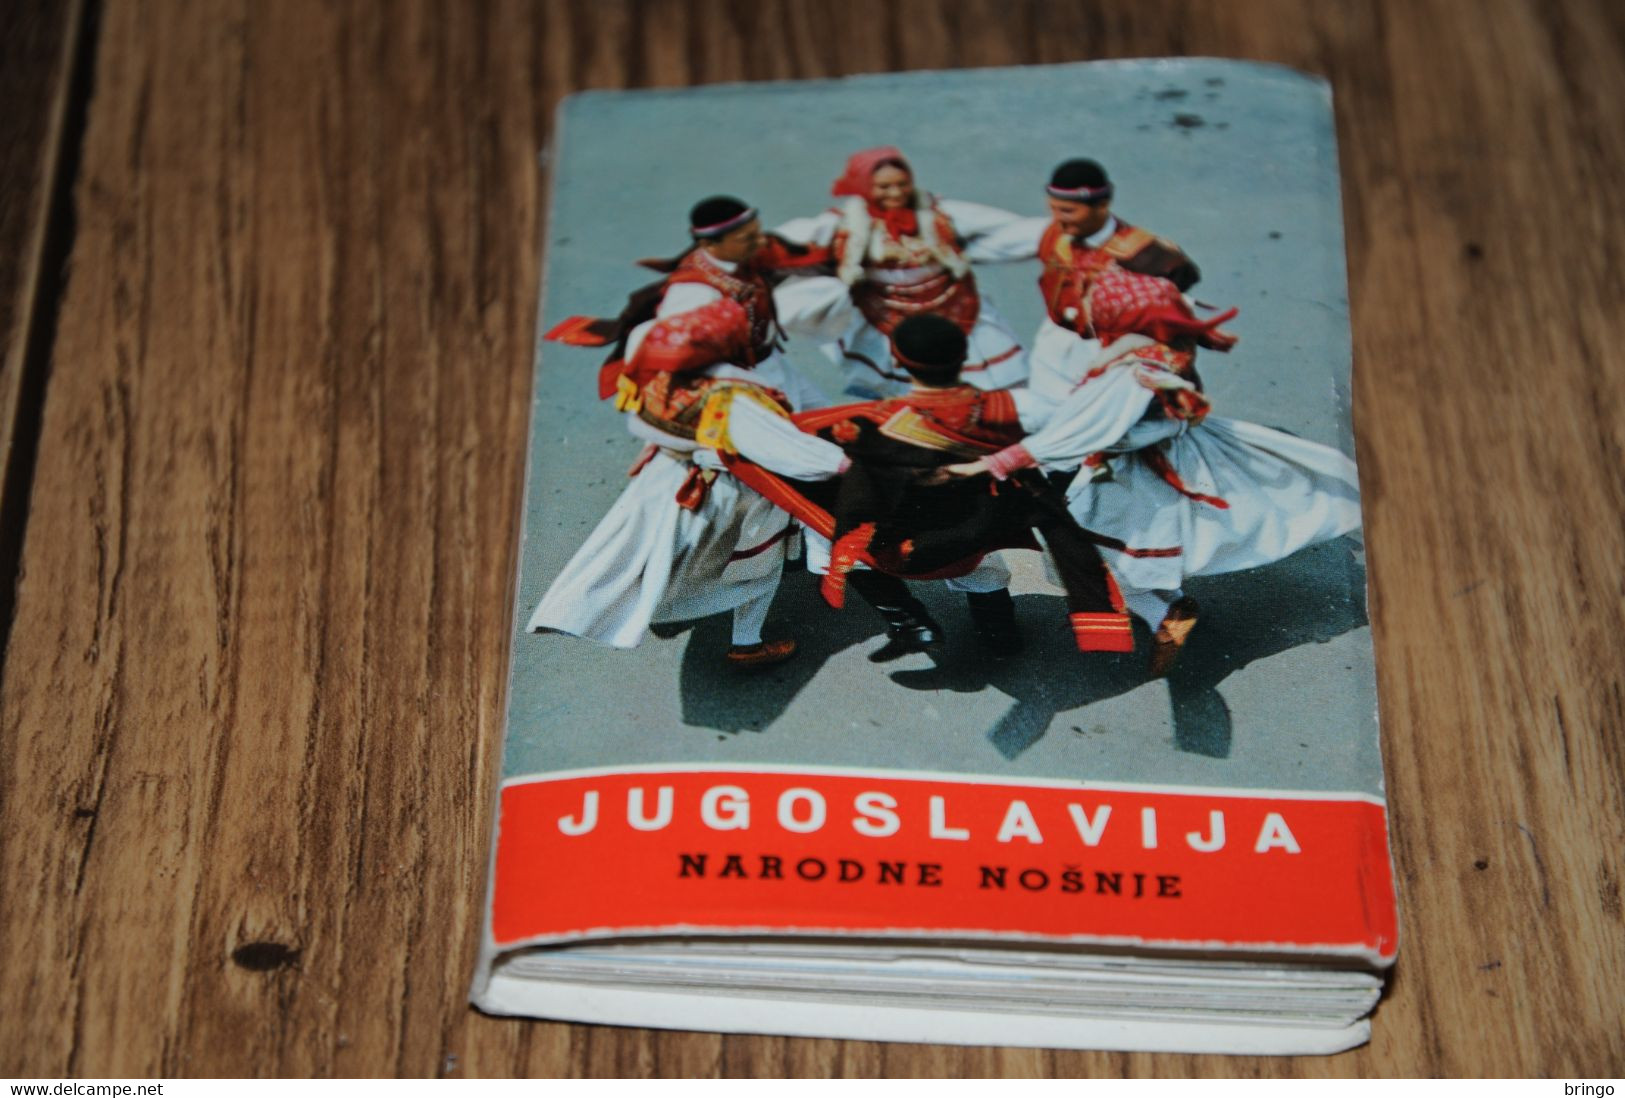 JUGOSLAVIJA  YUGOSLAVIA, NARODNE NOSNJE, 16 CARDS / LEPORELLO /  FOLK COSTUMES - Jugoslawien